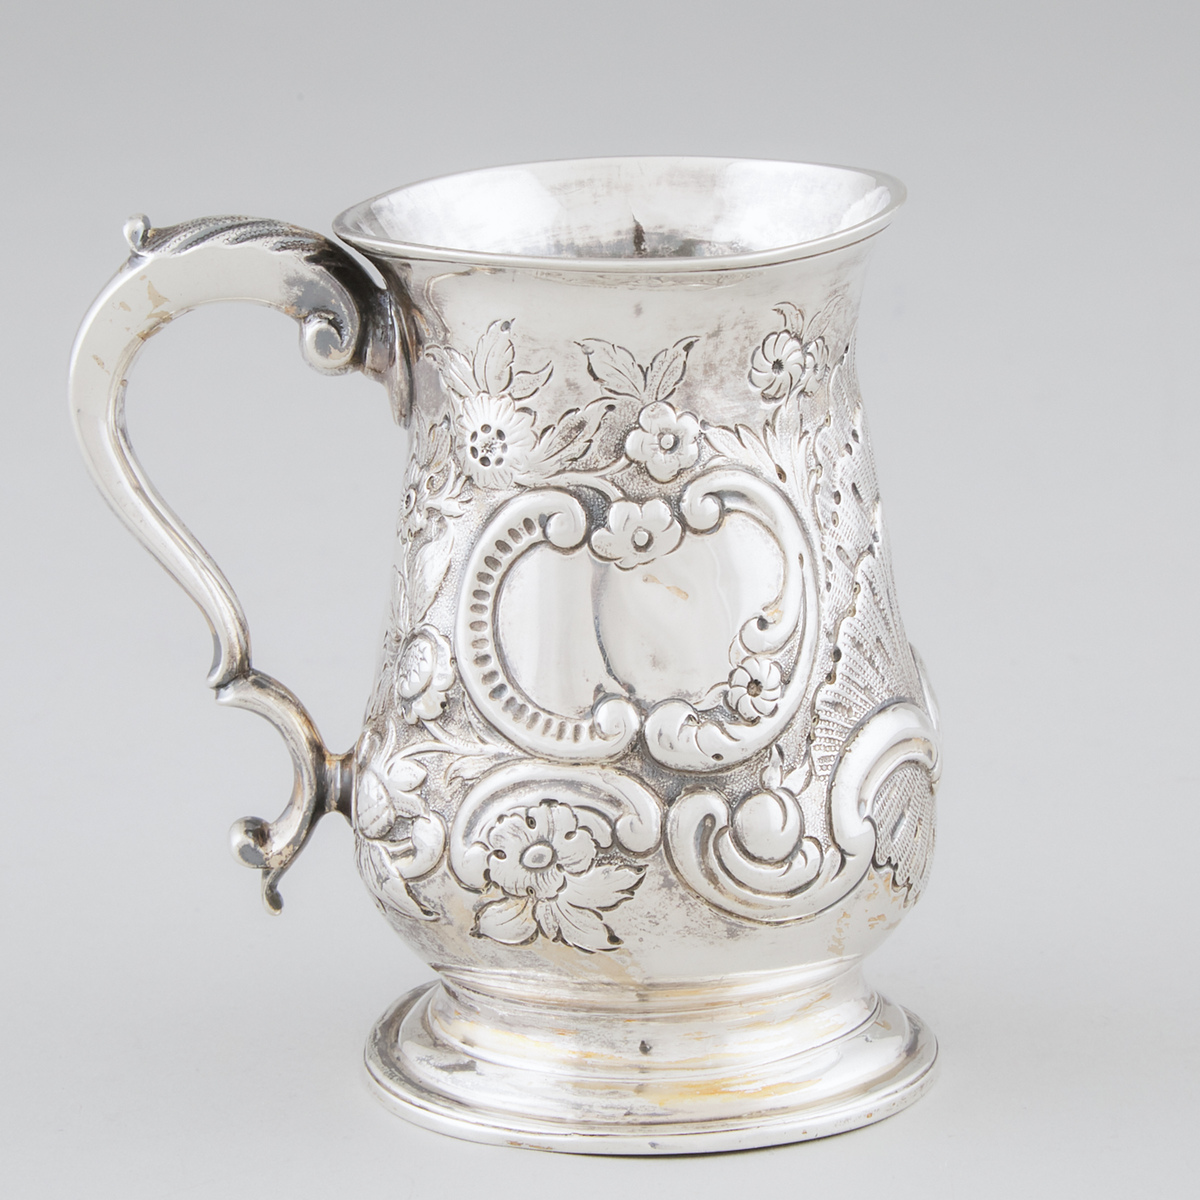 George III Silver Mug, London, 1781, height 4.2 in — 10.7 cm - Image 2 of 2